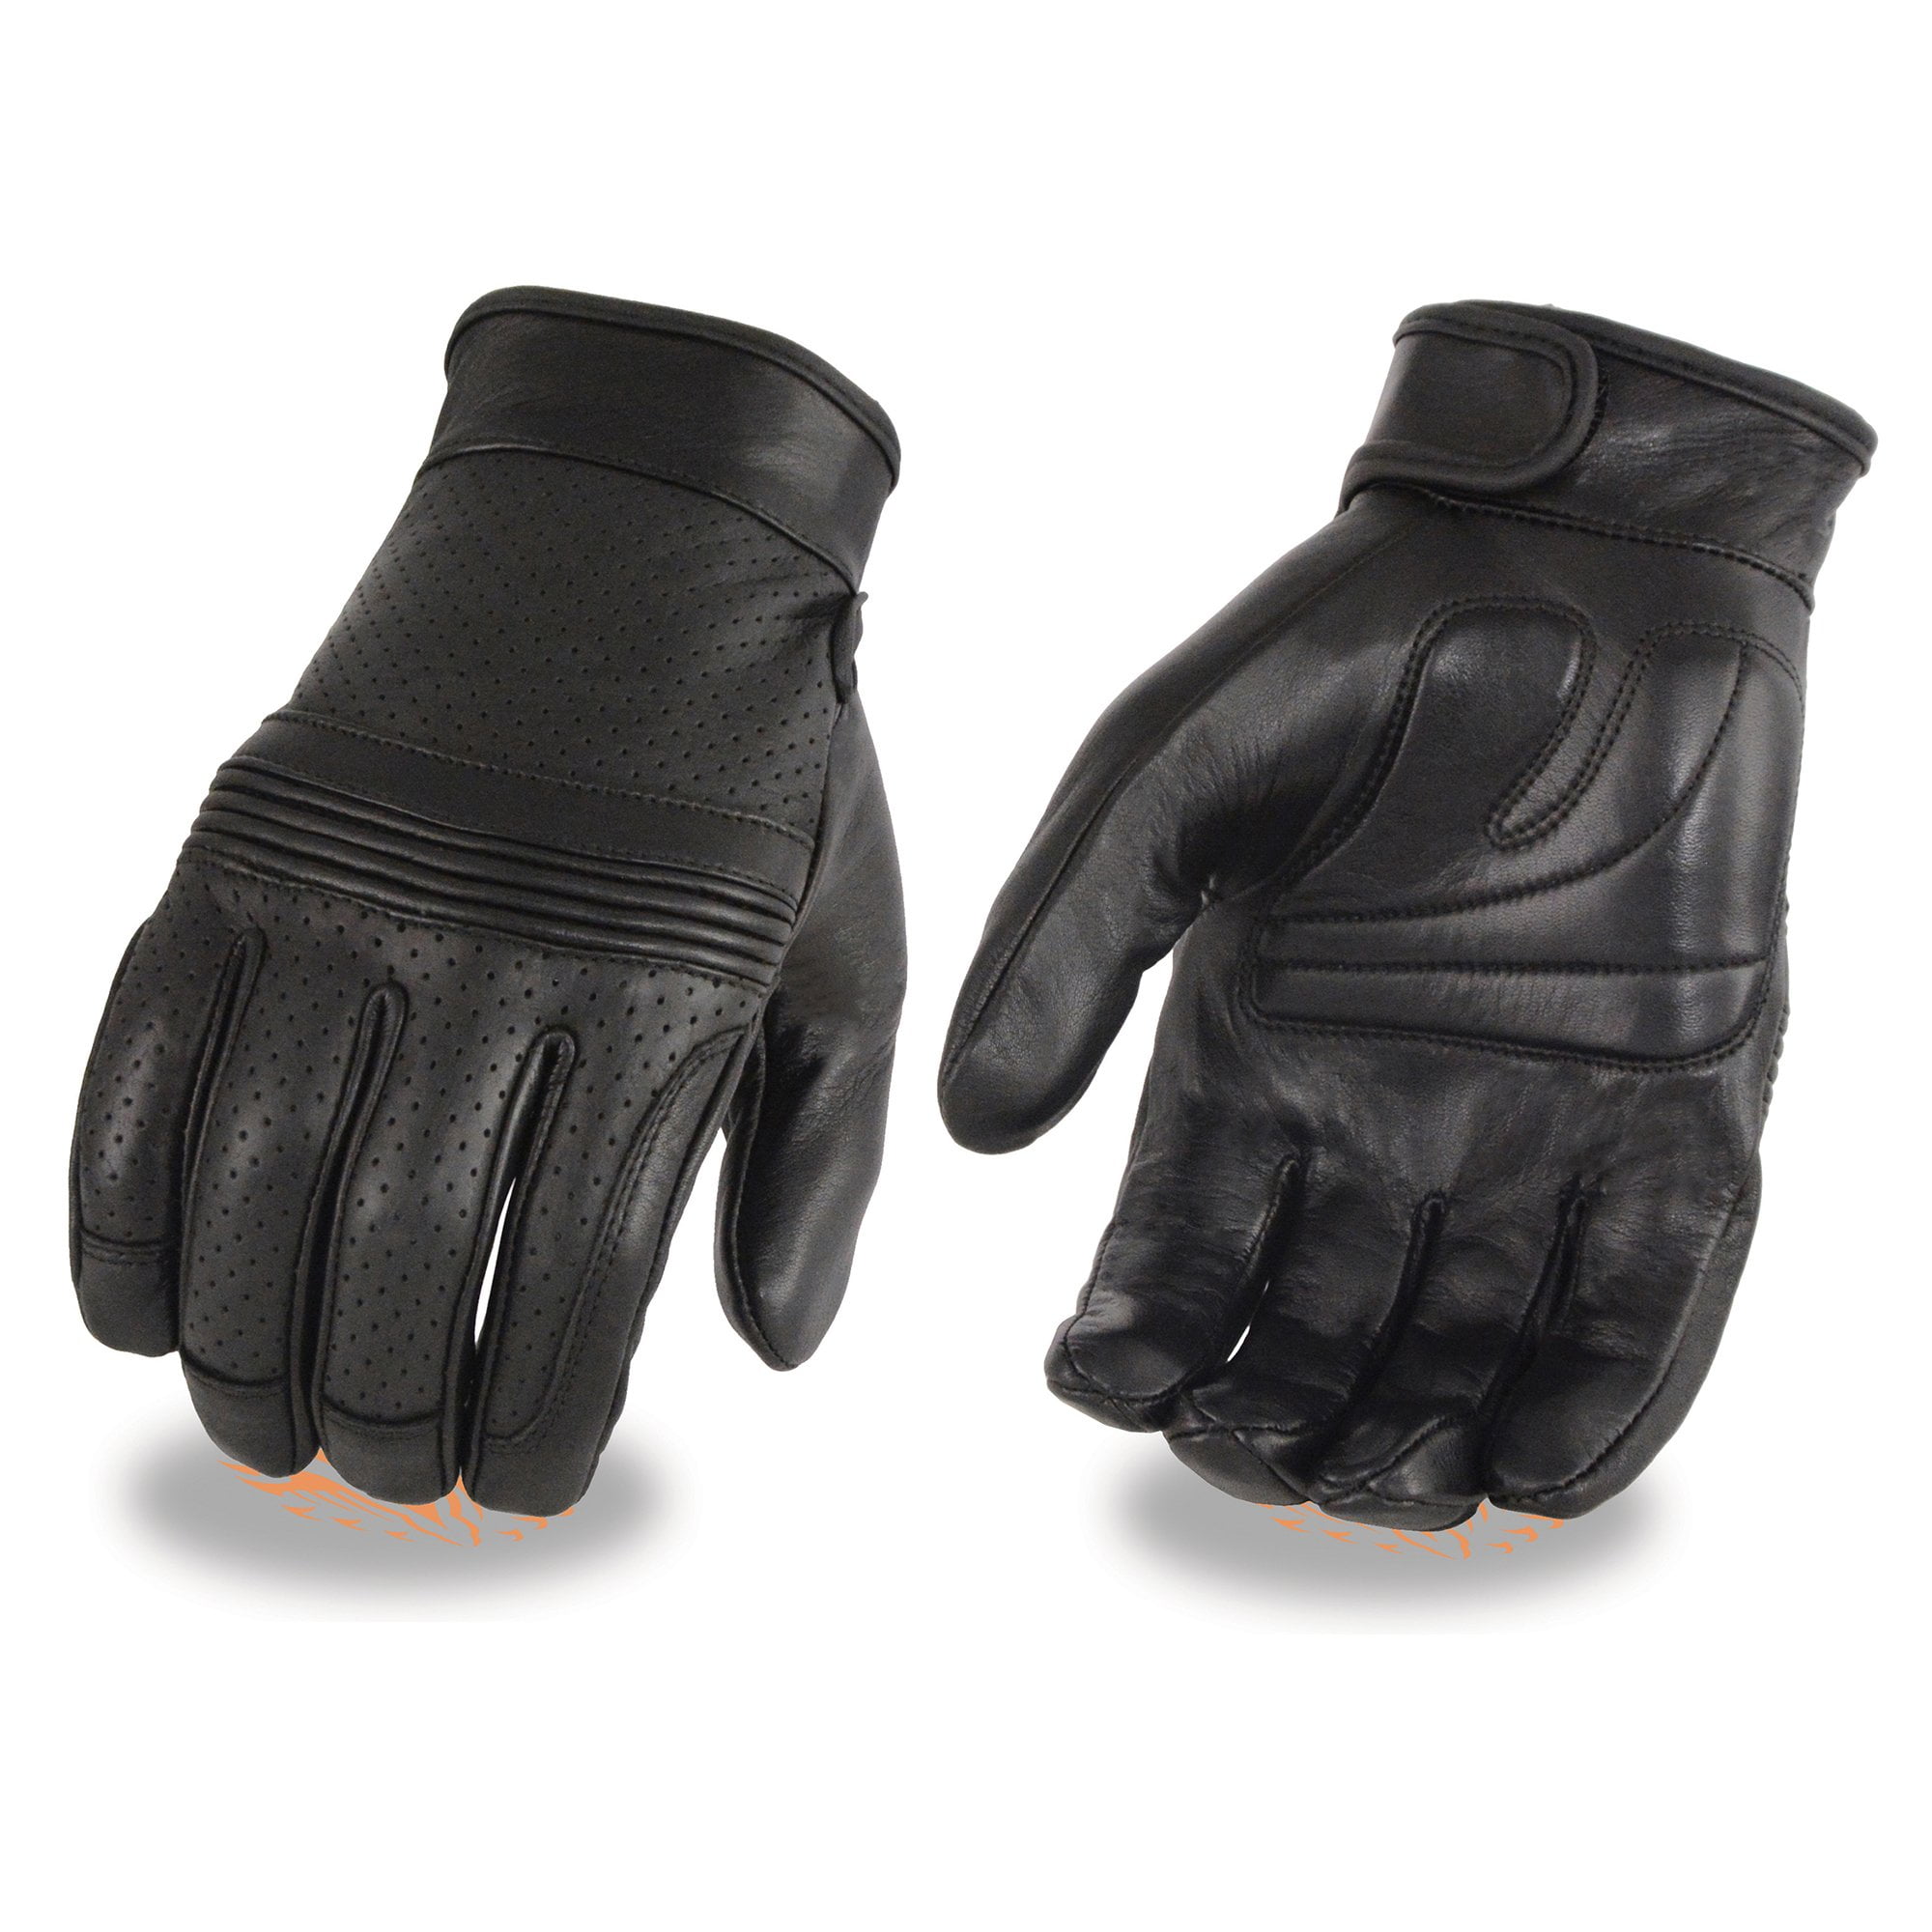 MG7570 Men's Leather Riding Glove w/ Reflective Skull Design & Gel Palm